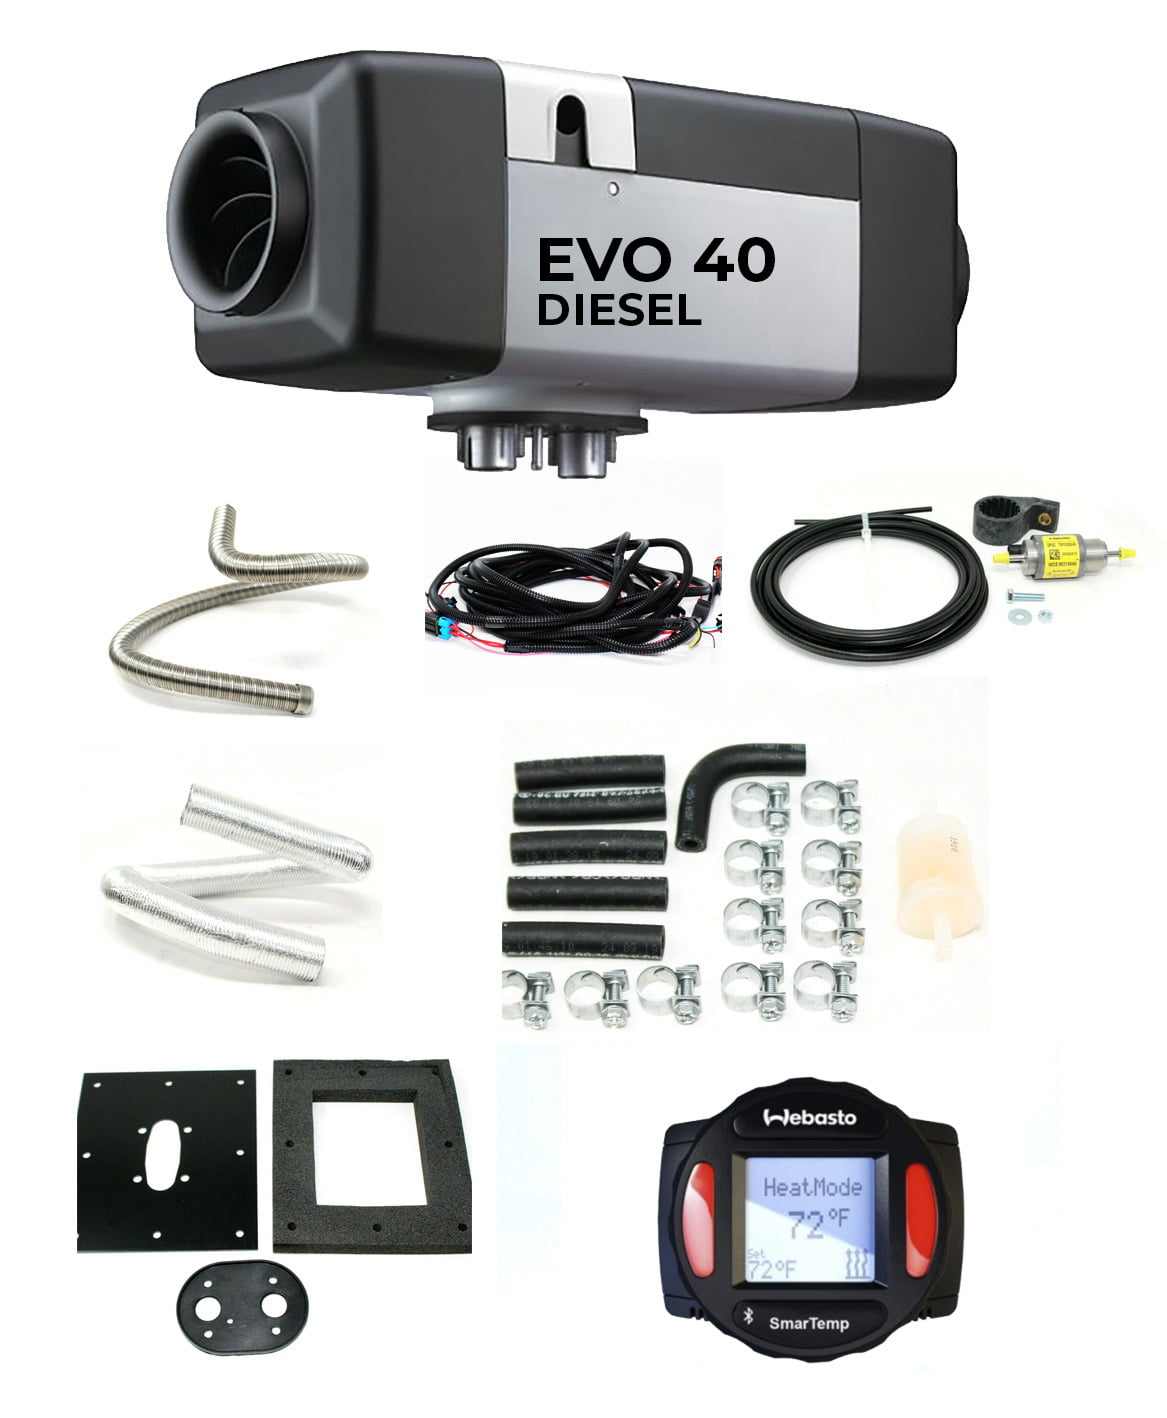 https://www.vanlifeoutfitters.com/wp-content/uploads/2022/08/webasto-evo-40-diesel-heater-with-smartemp-3.jpg